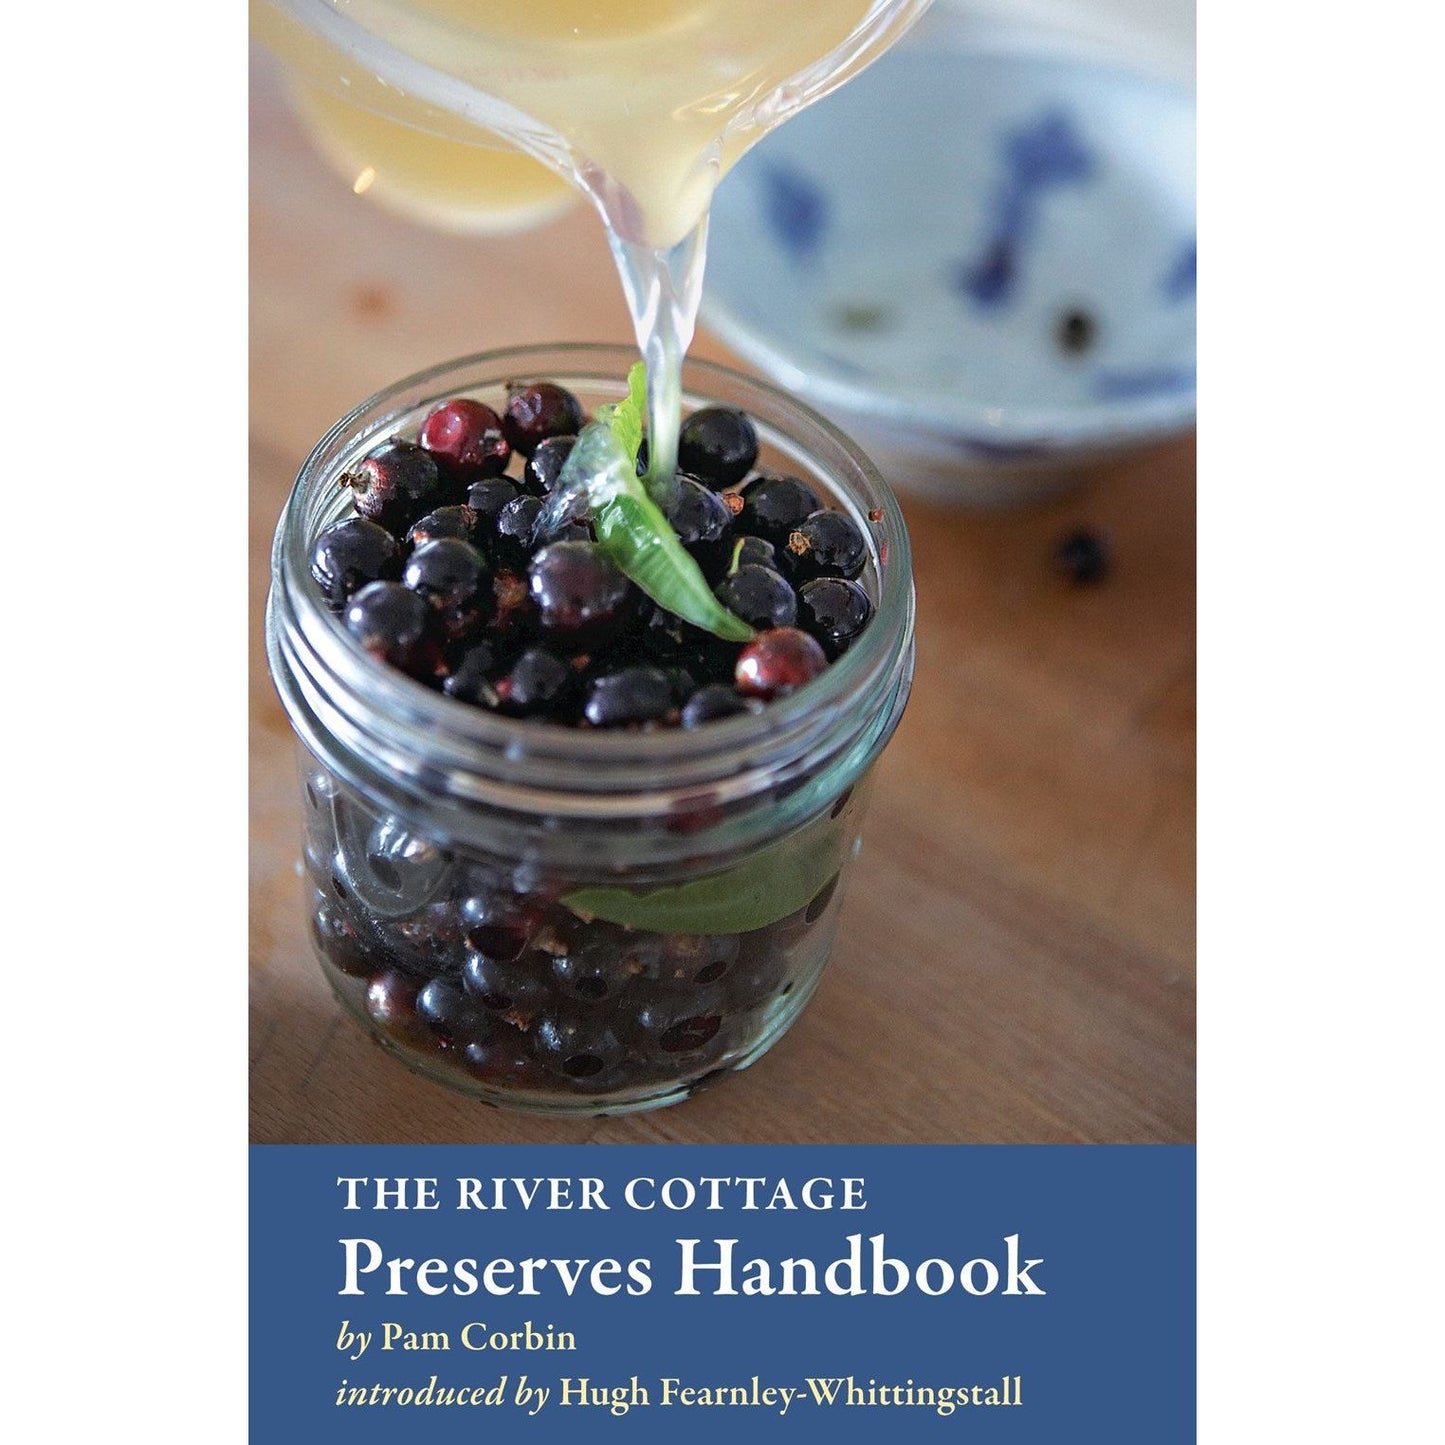 The River Cottage Preserves Handbook (Pam Corbin)